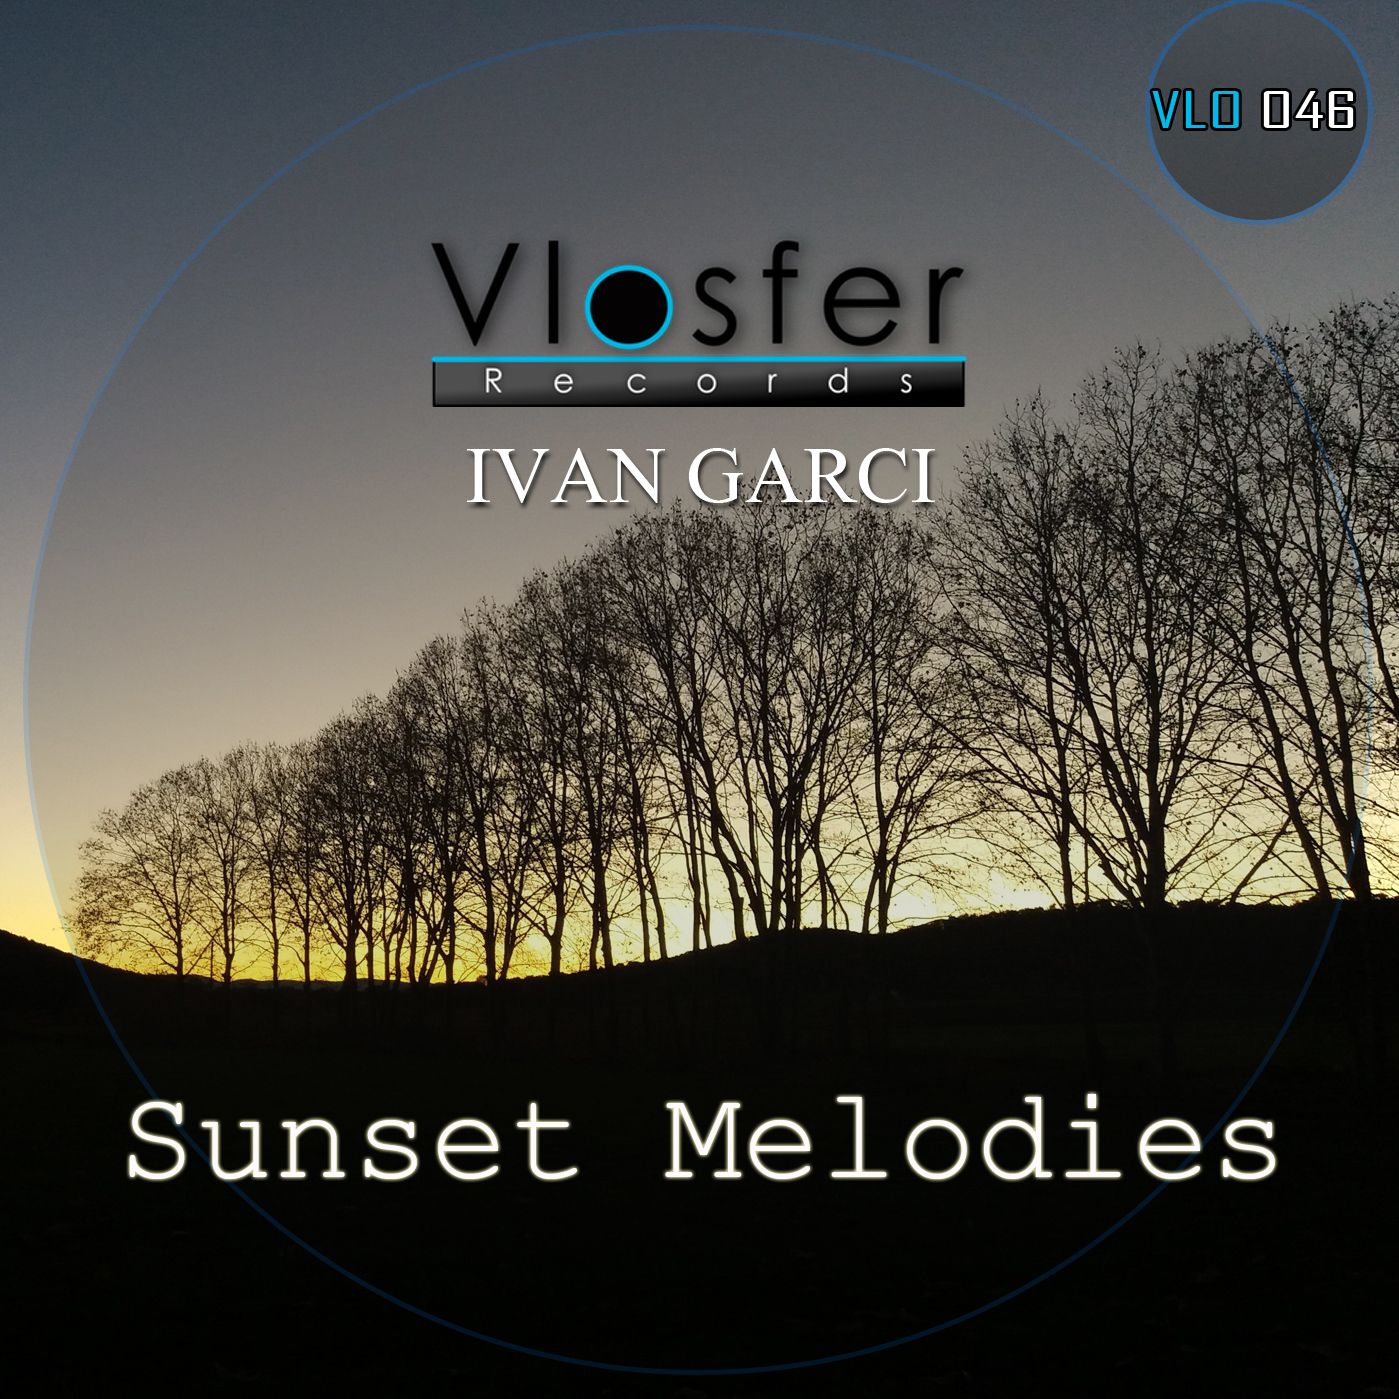 Luchdaich sìos Clear - Ivan Garci (low quality sound) Vlosfer records.